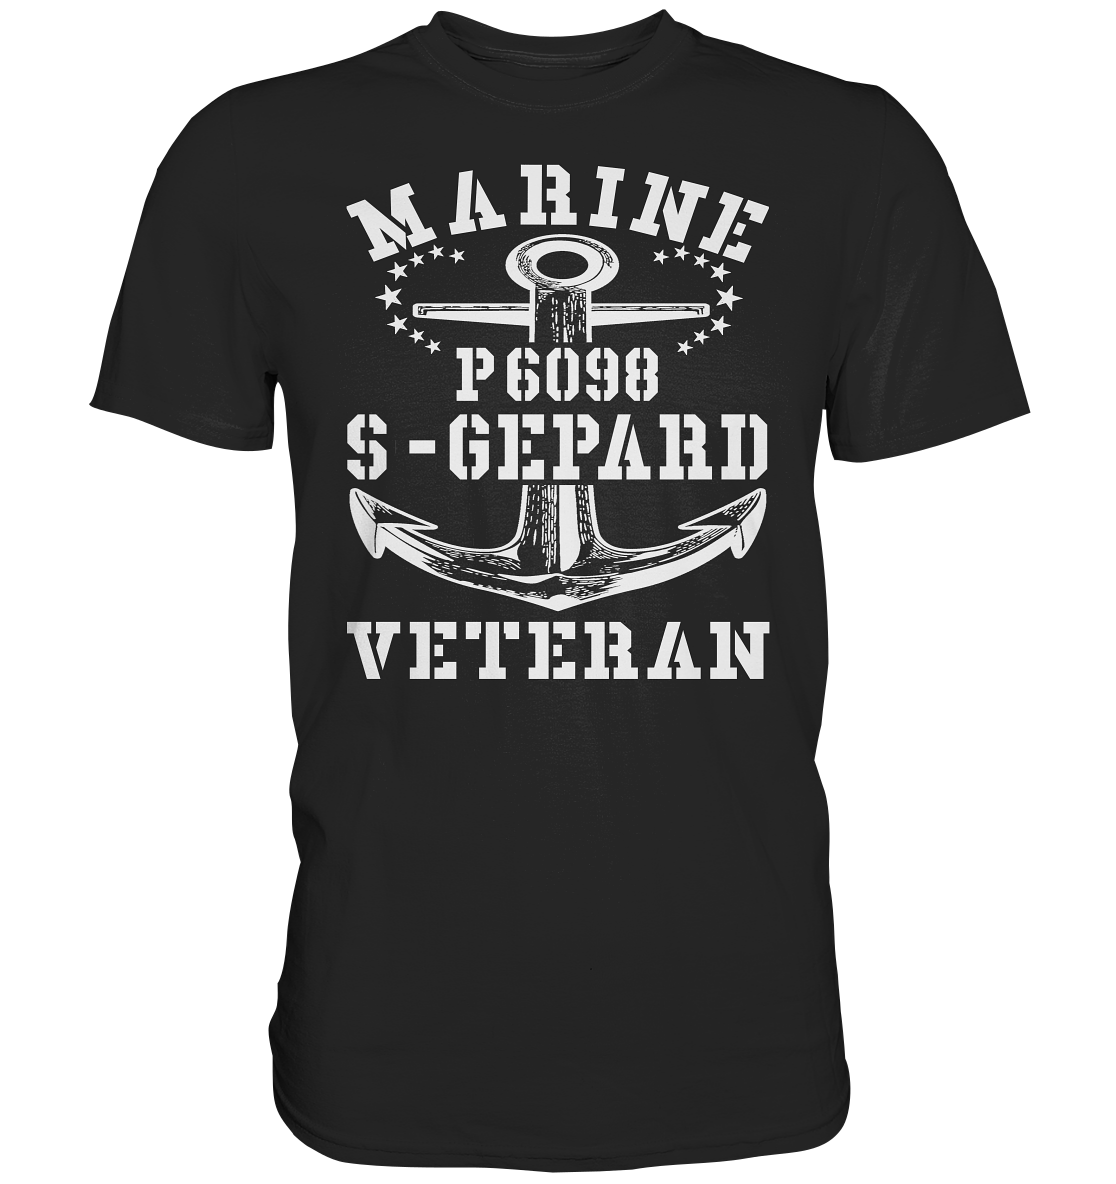 P6098 S-GEPARD Marine Veteran - Premium Shirt